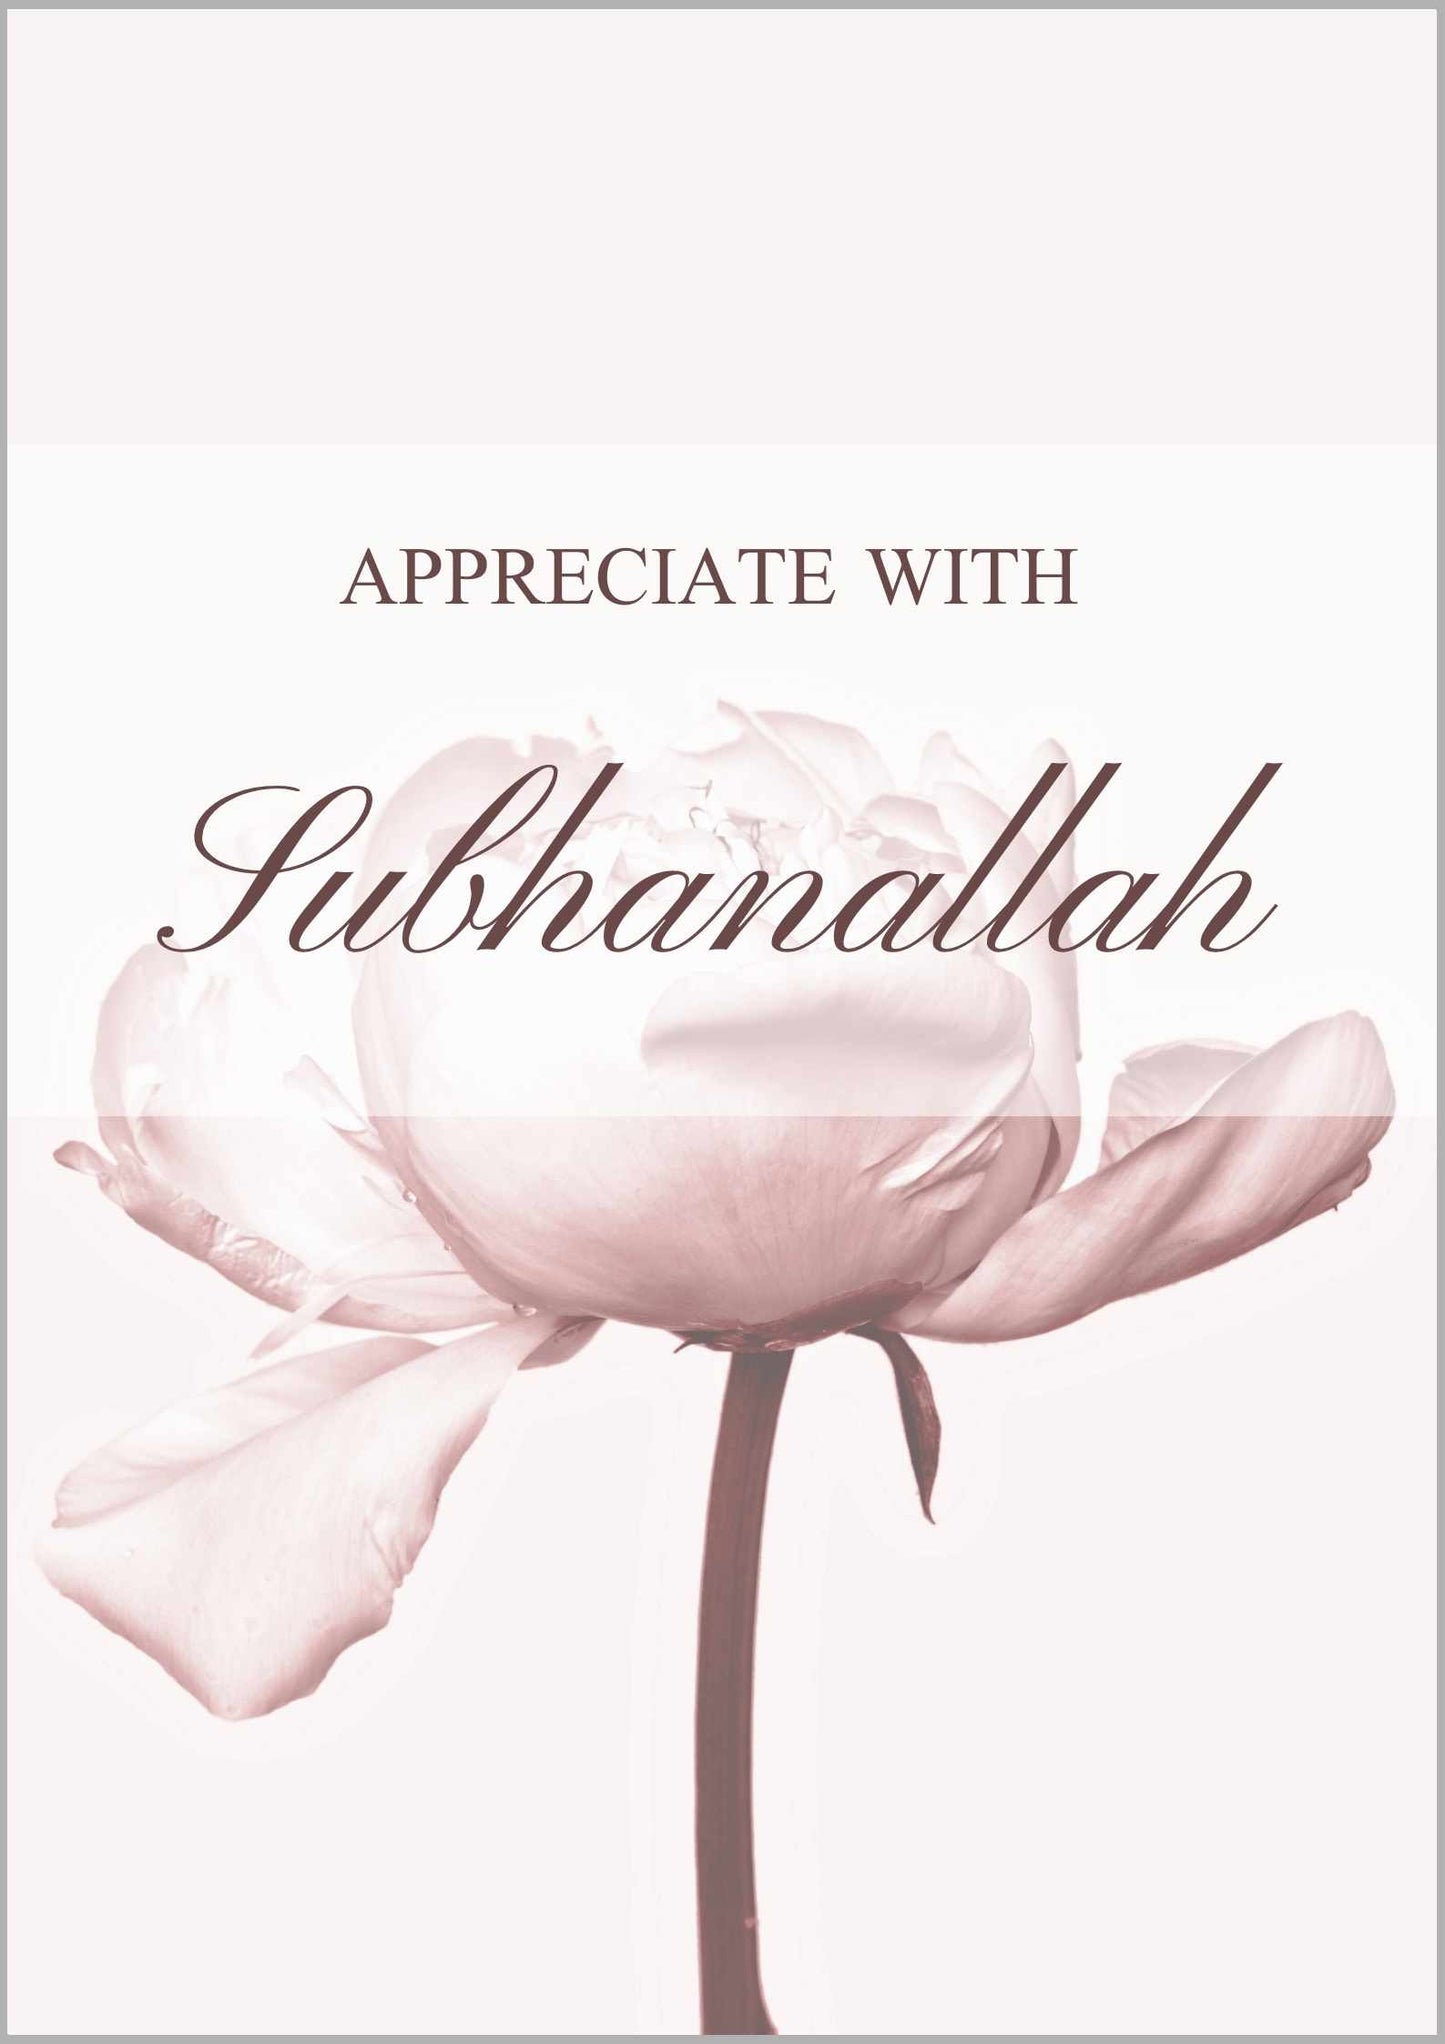 Appreciate with Subhanallah